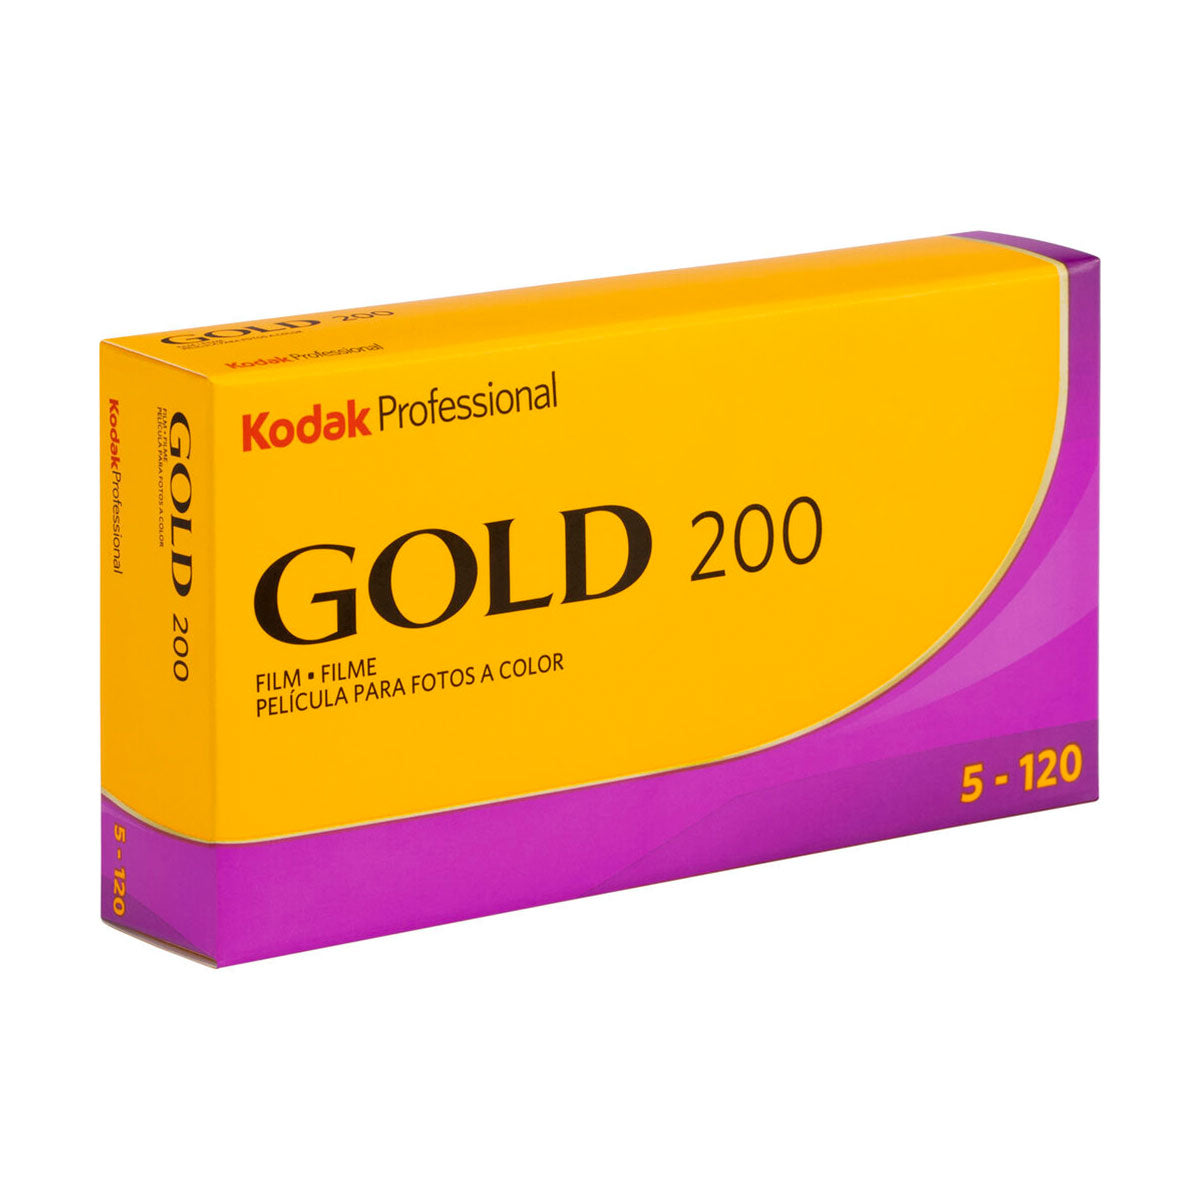 Kodak Professional Portra 400 Color Negative 120 Film - 5 Rolls (8331506)